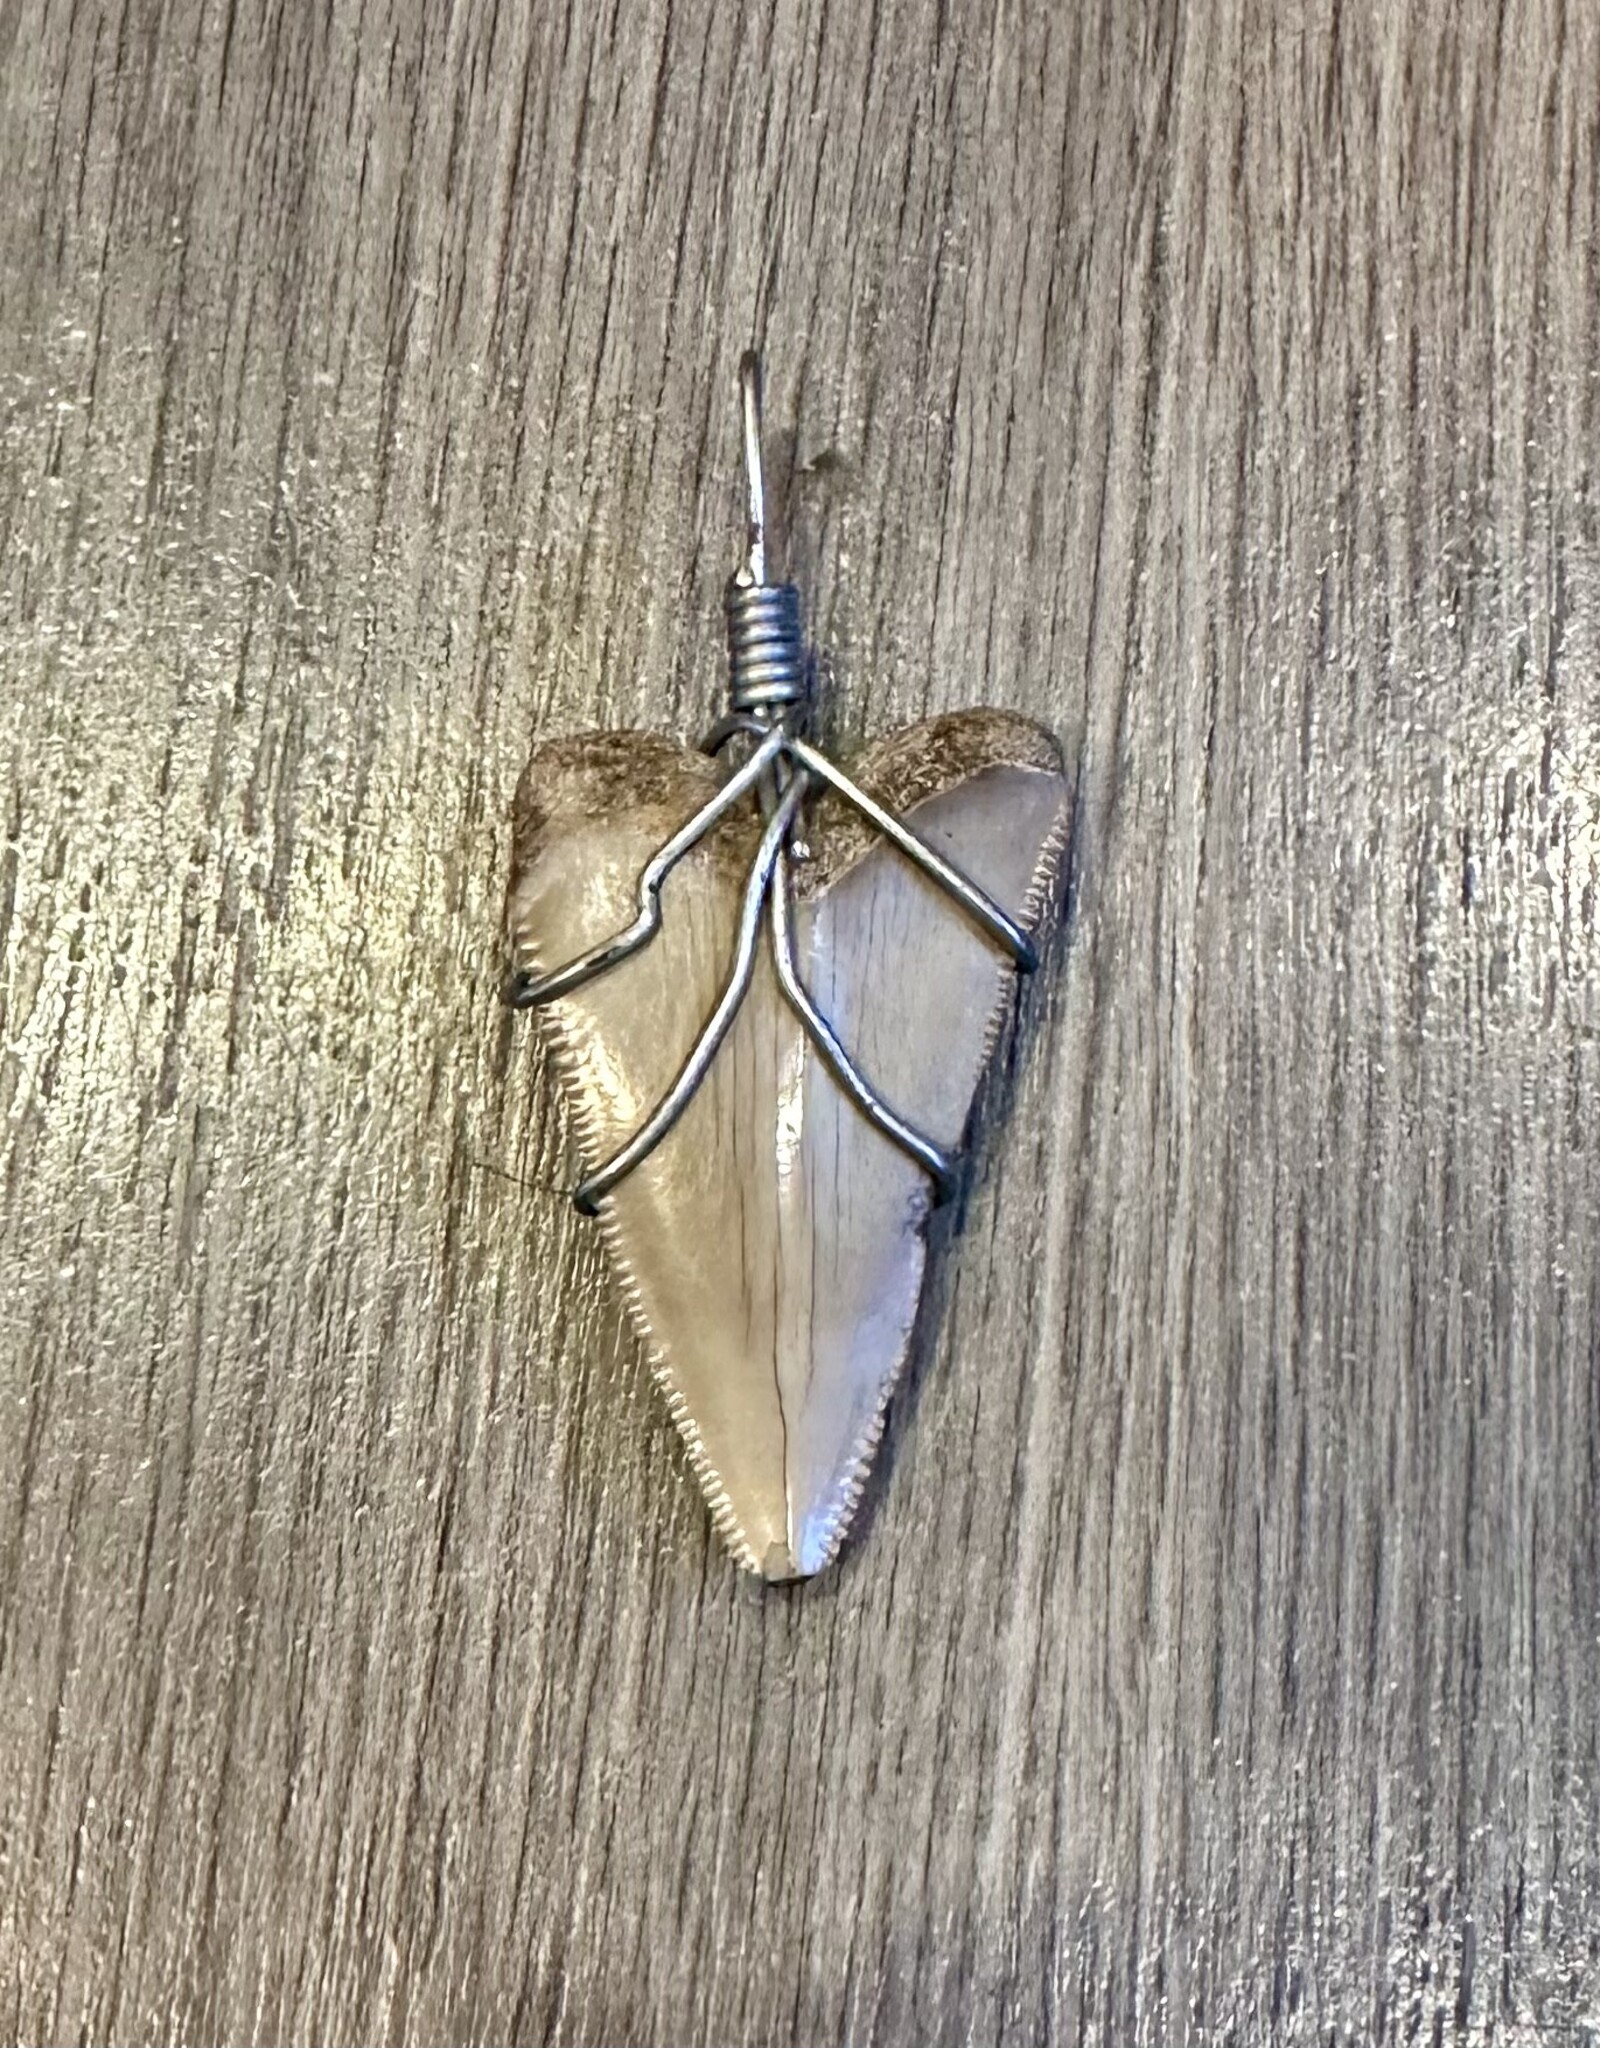 Jewelry - Shark Tooth Pendant